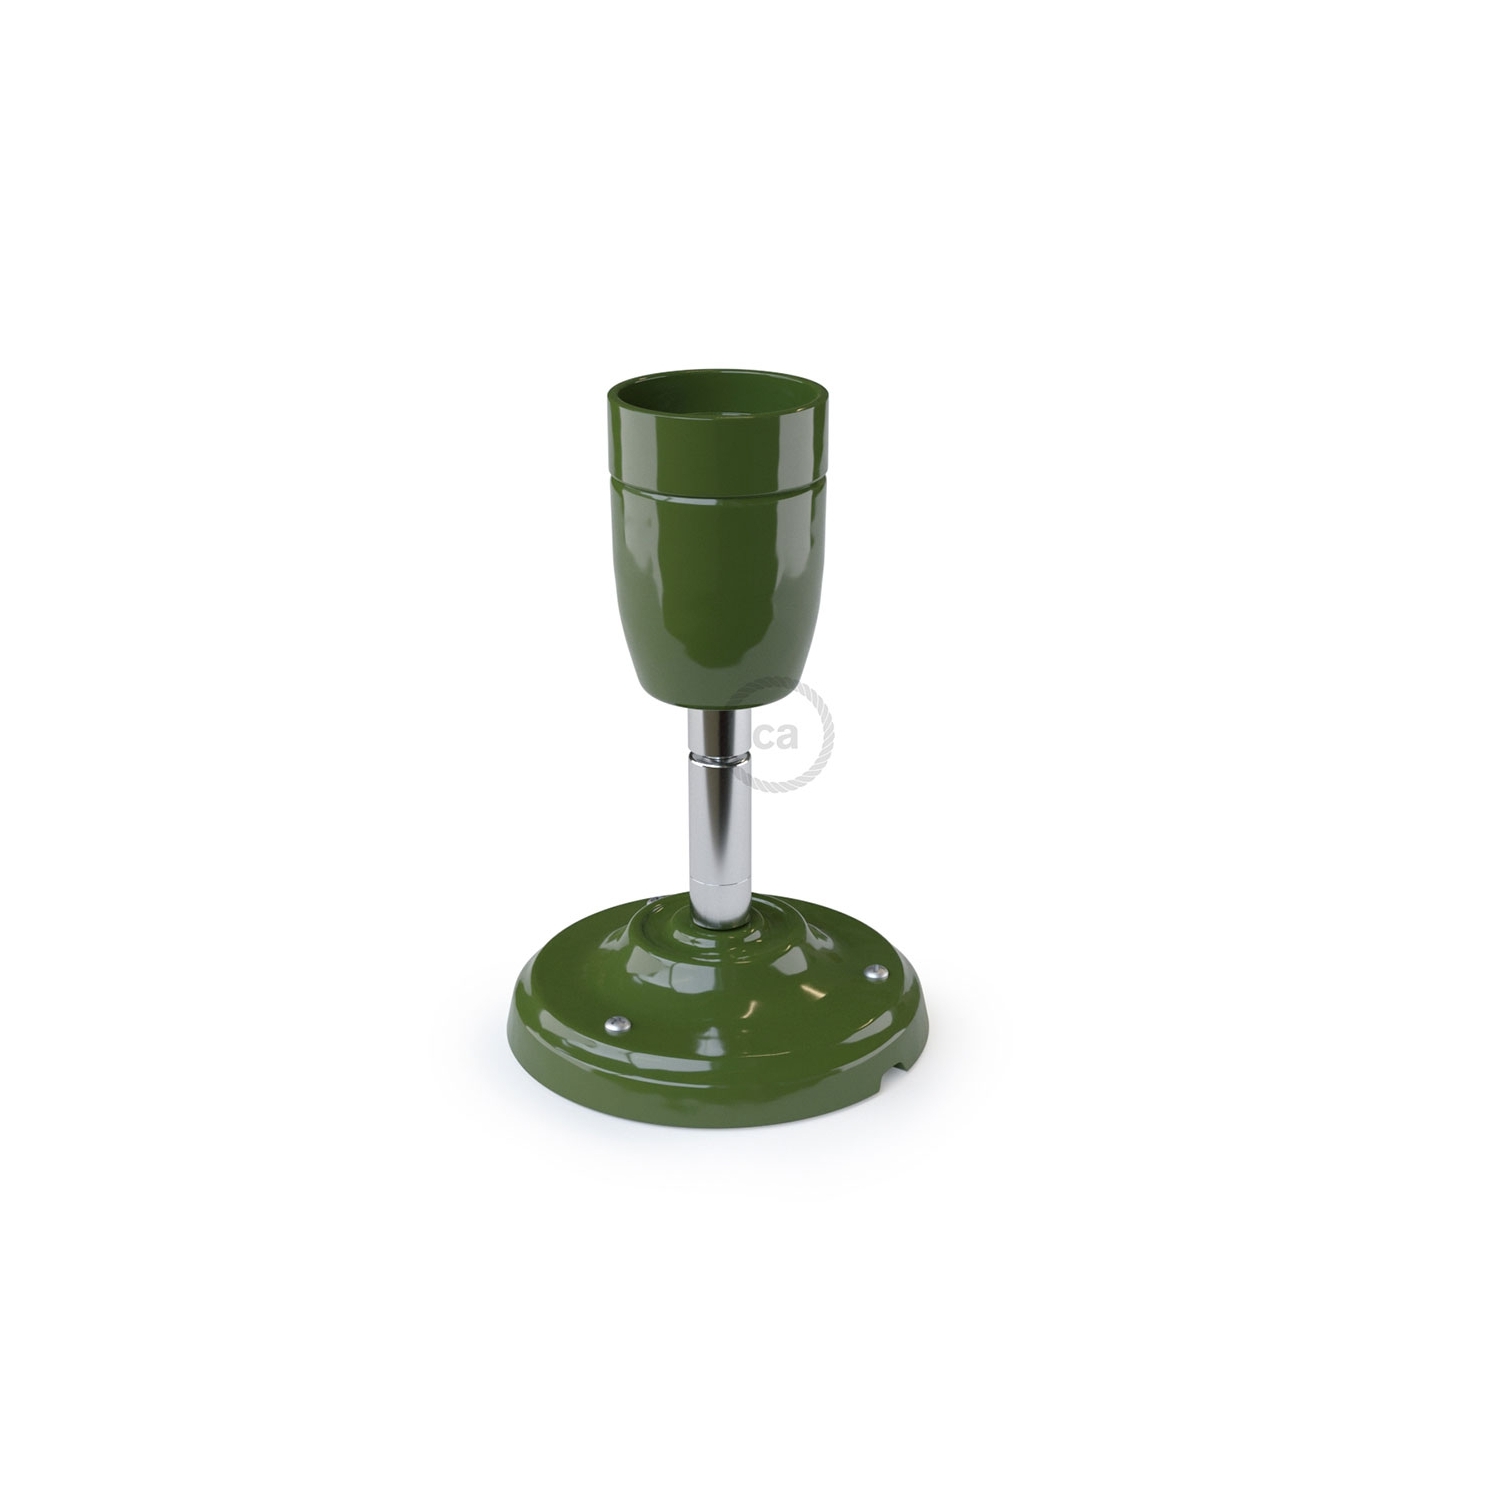 Fermaluce Classic 90° Green adjustable, porcelain wall flush light